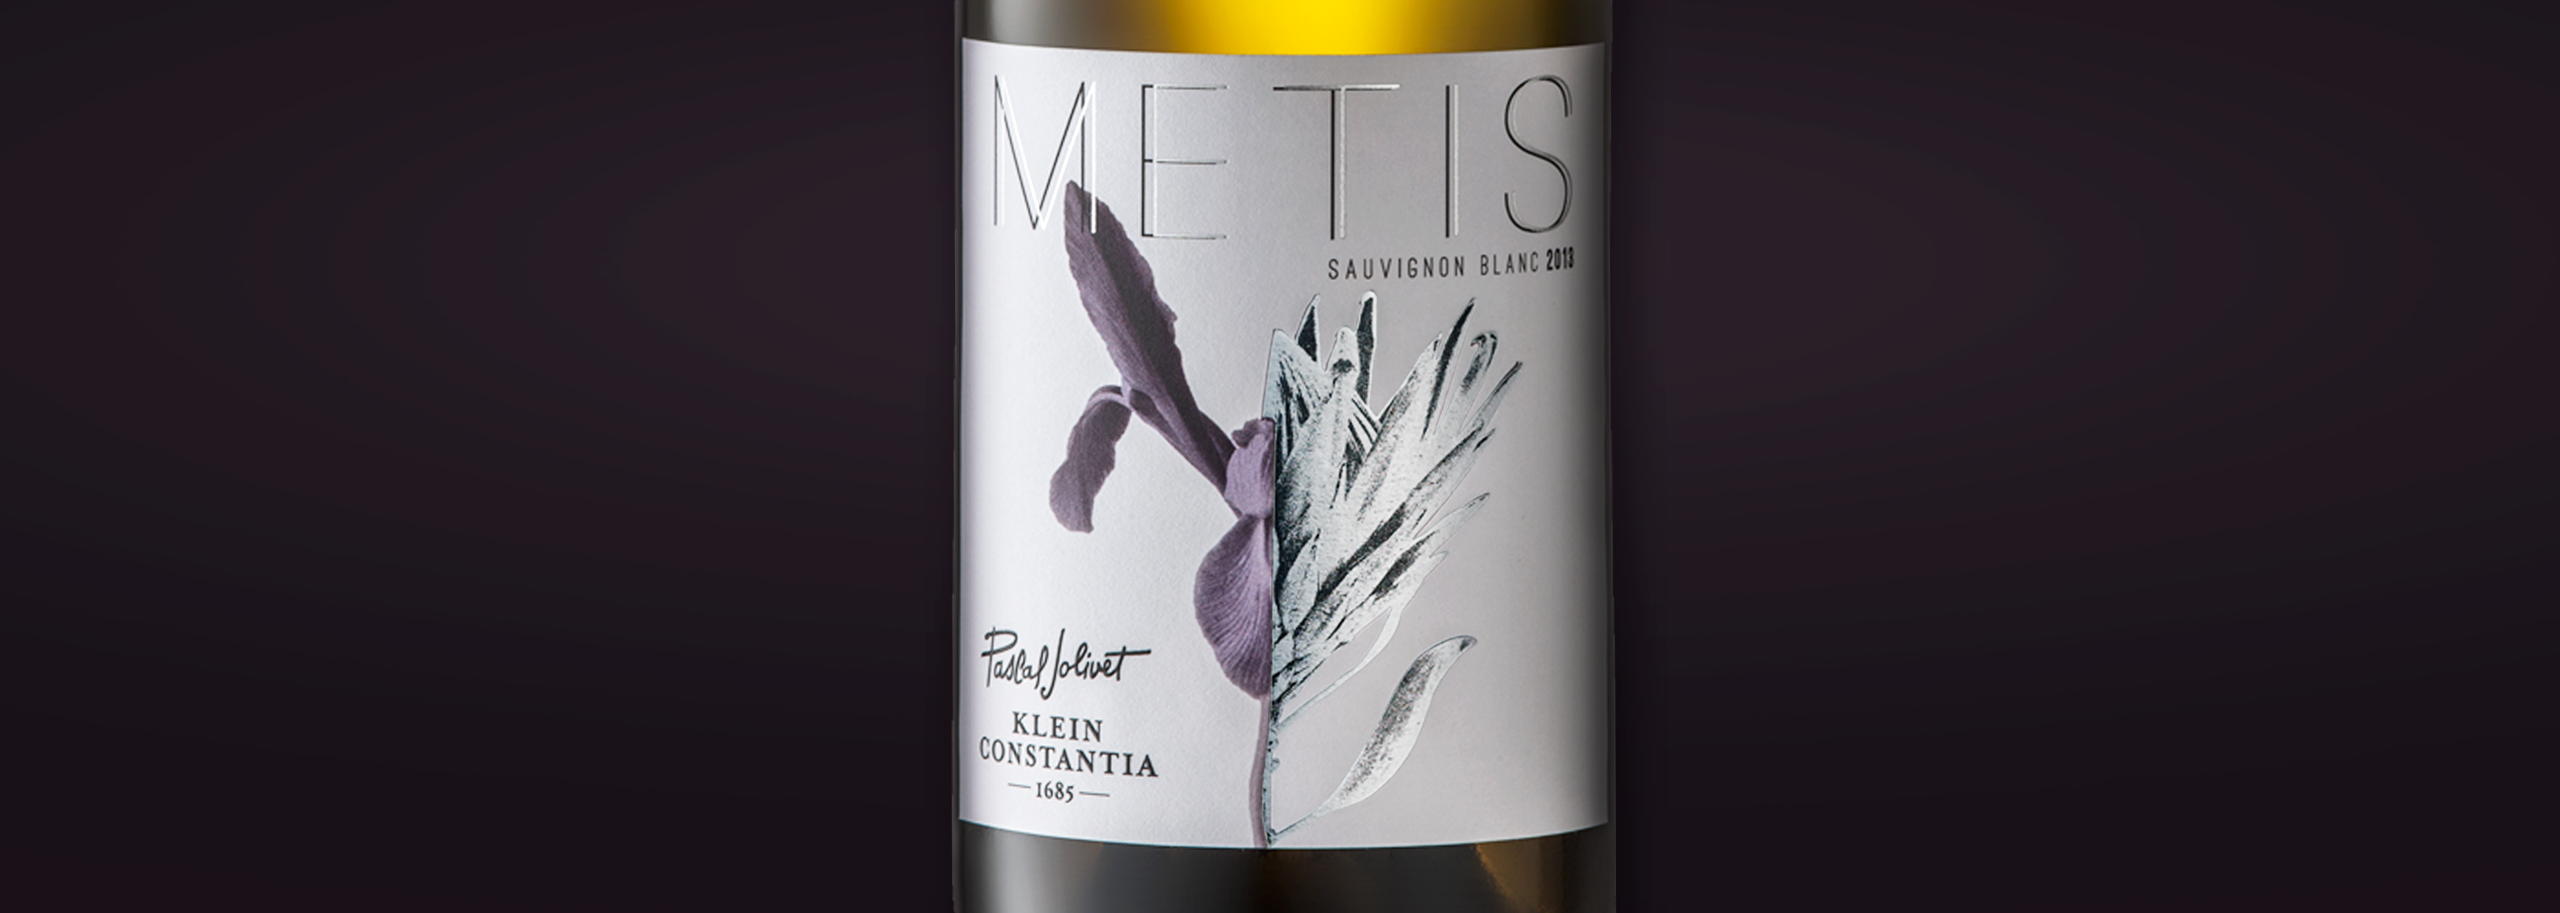 Klein Constantia Metis Wine Label-2